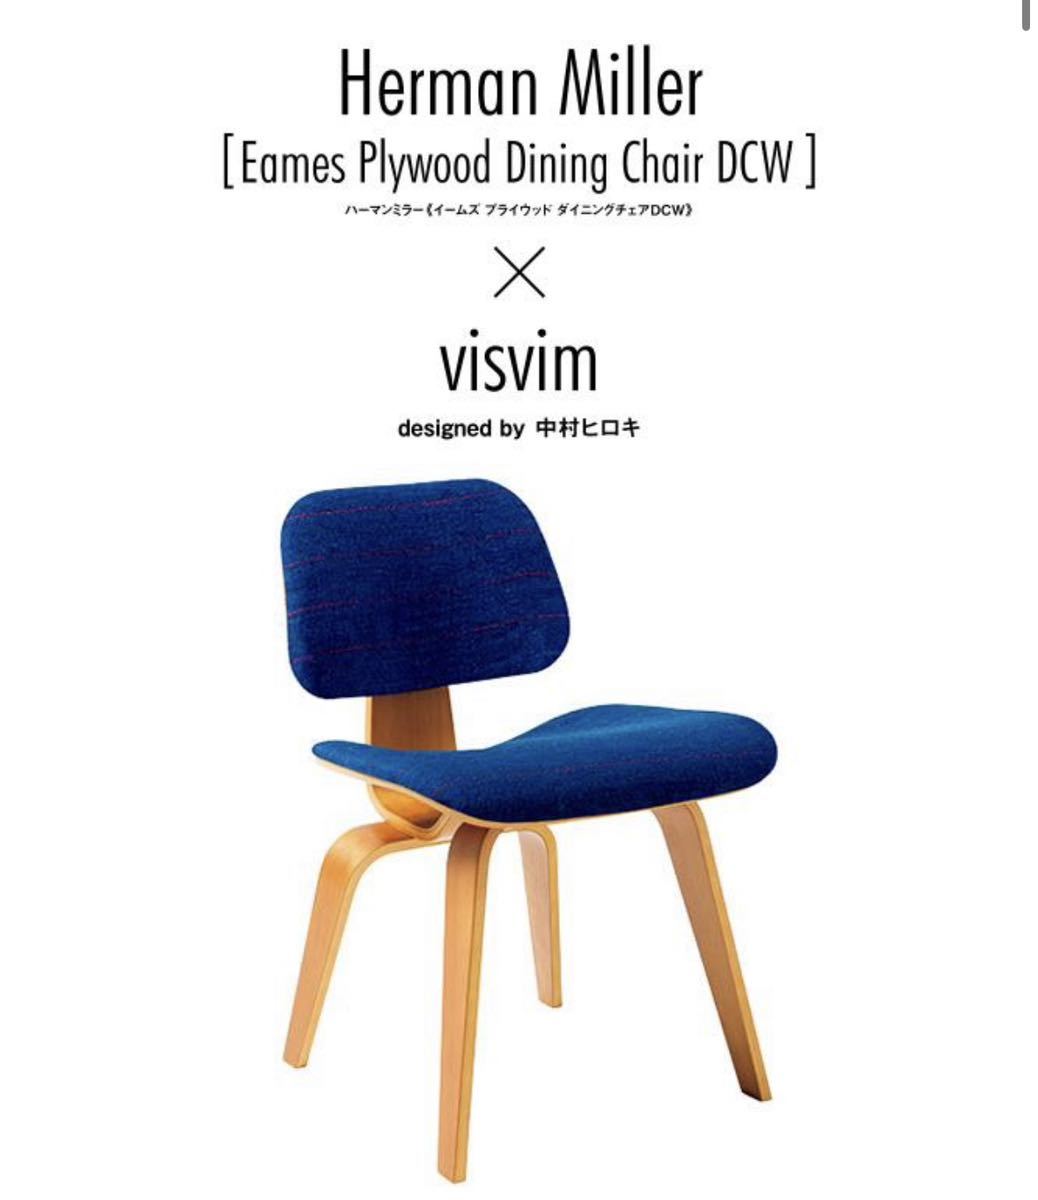 visvim イームズ Eames plywood dining chair